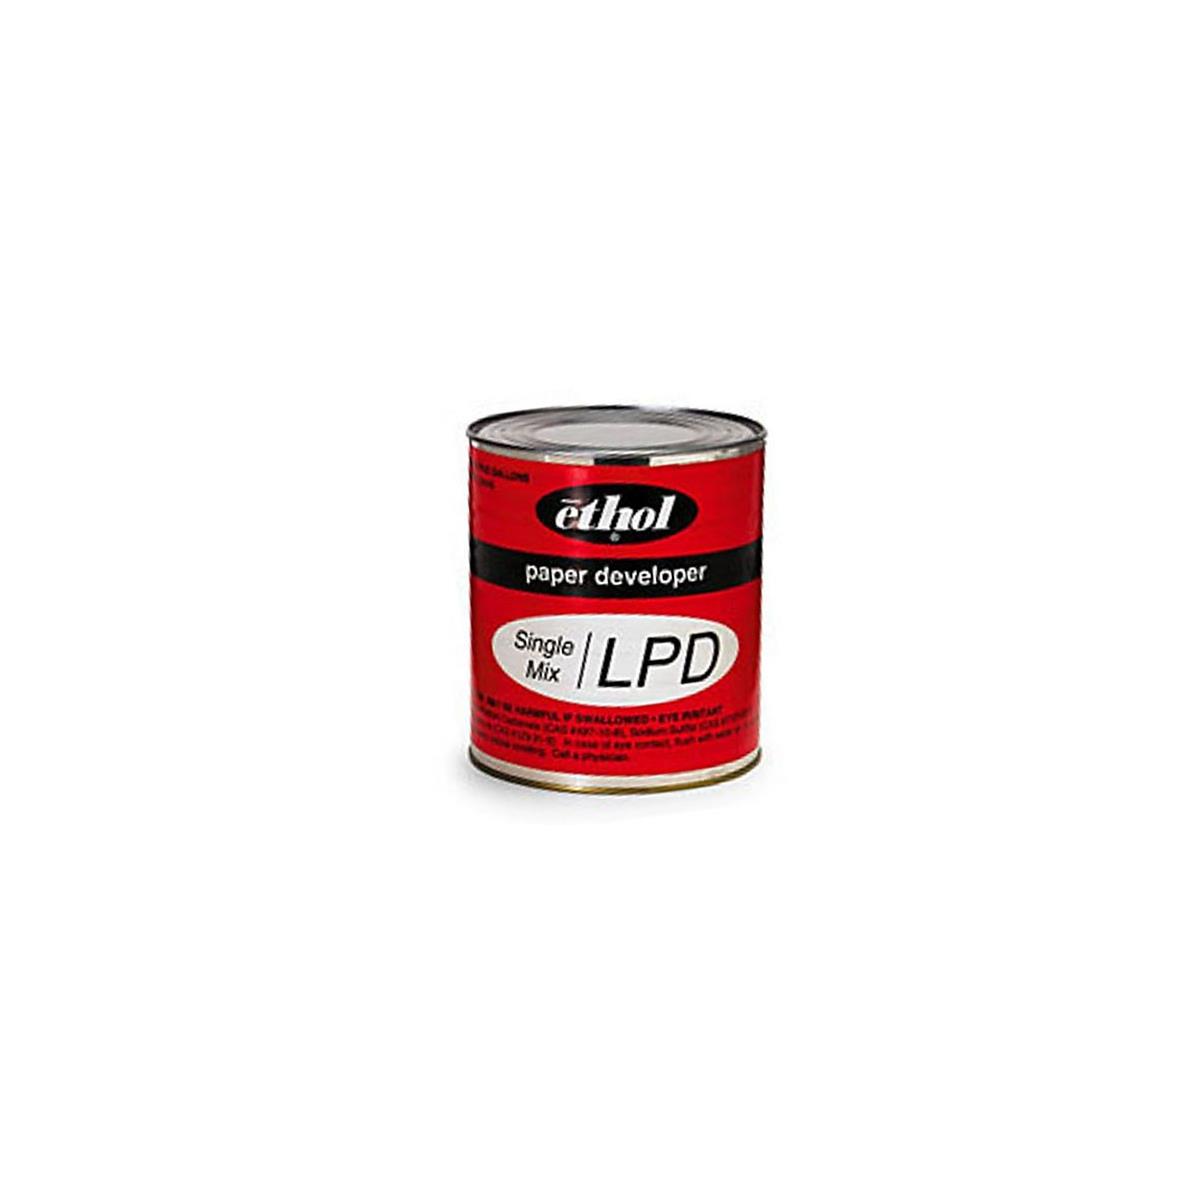 Image of Ethol LPD 5 Gallon Powder Black / White Paper Developer